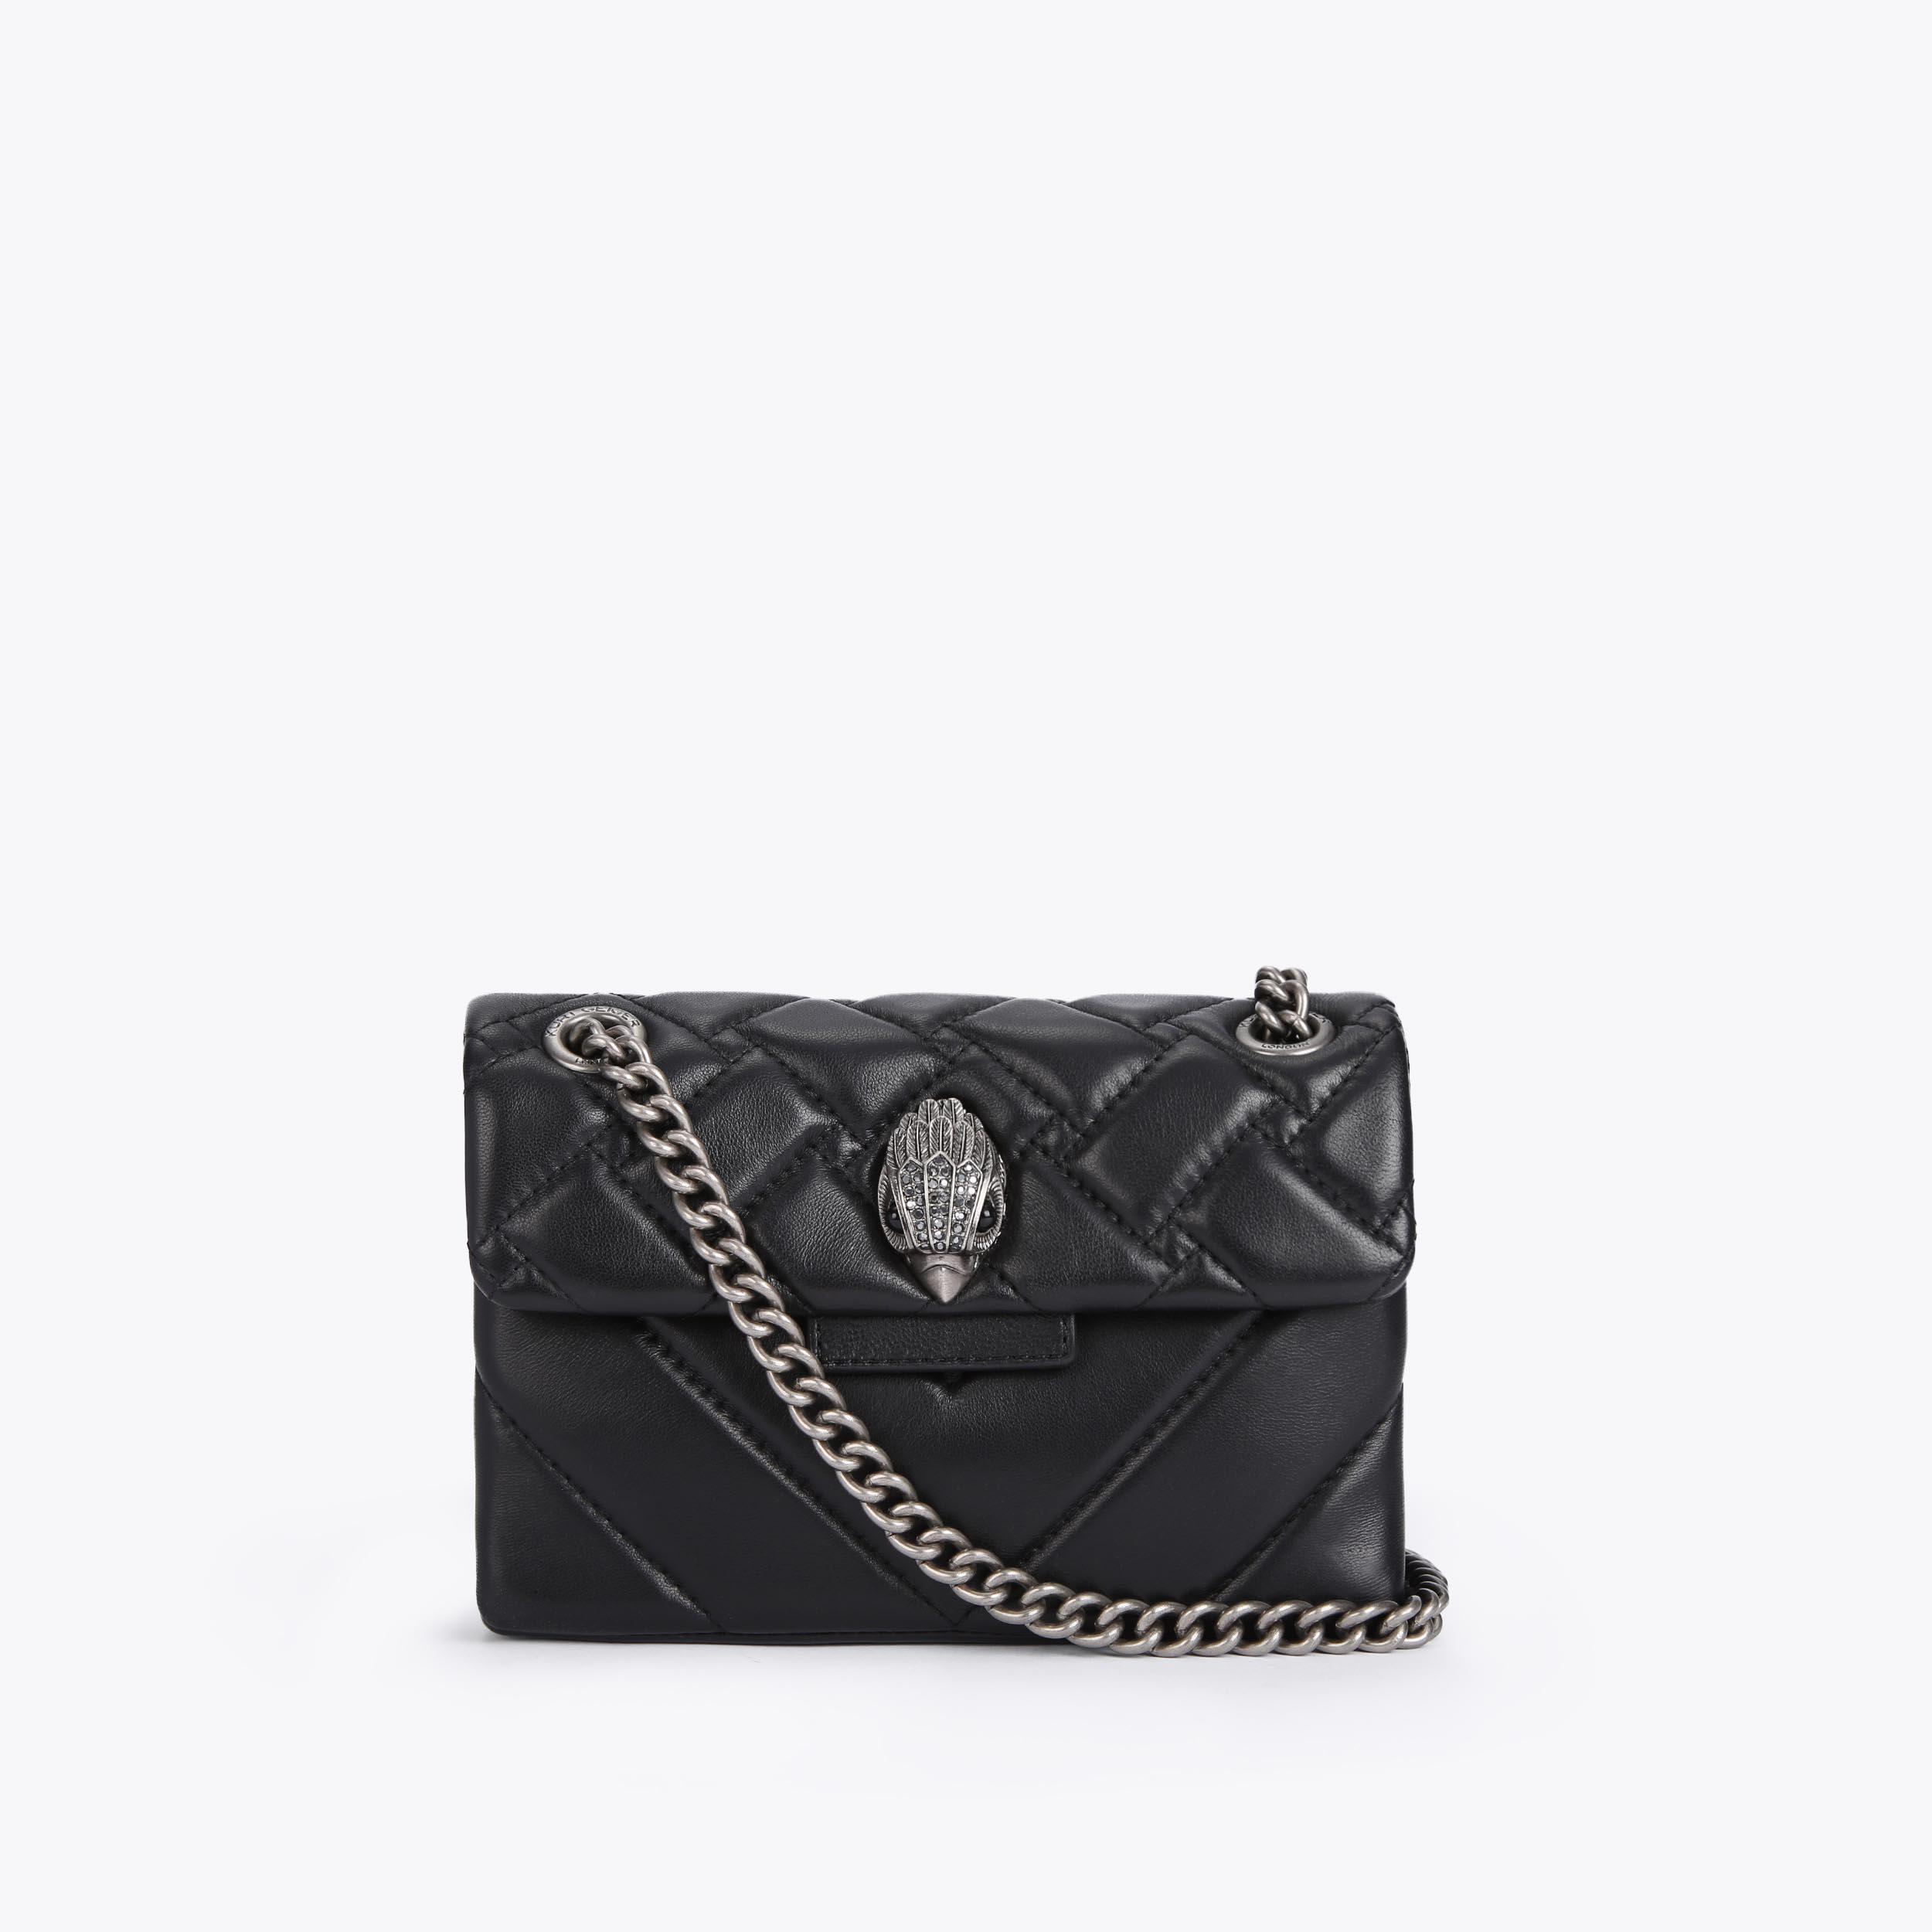 MINI KENSINGTON X BAG all BLACK Quilted Leather Mini Bag by KURT GEIGER ...